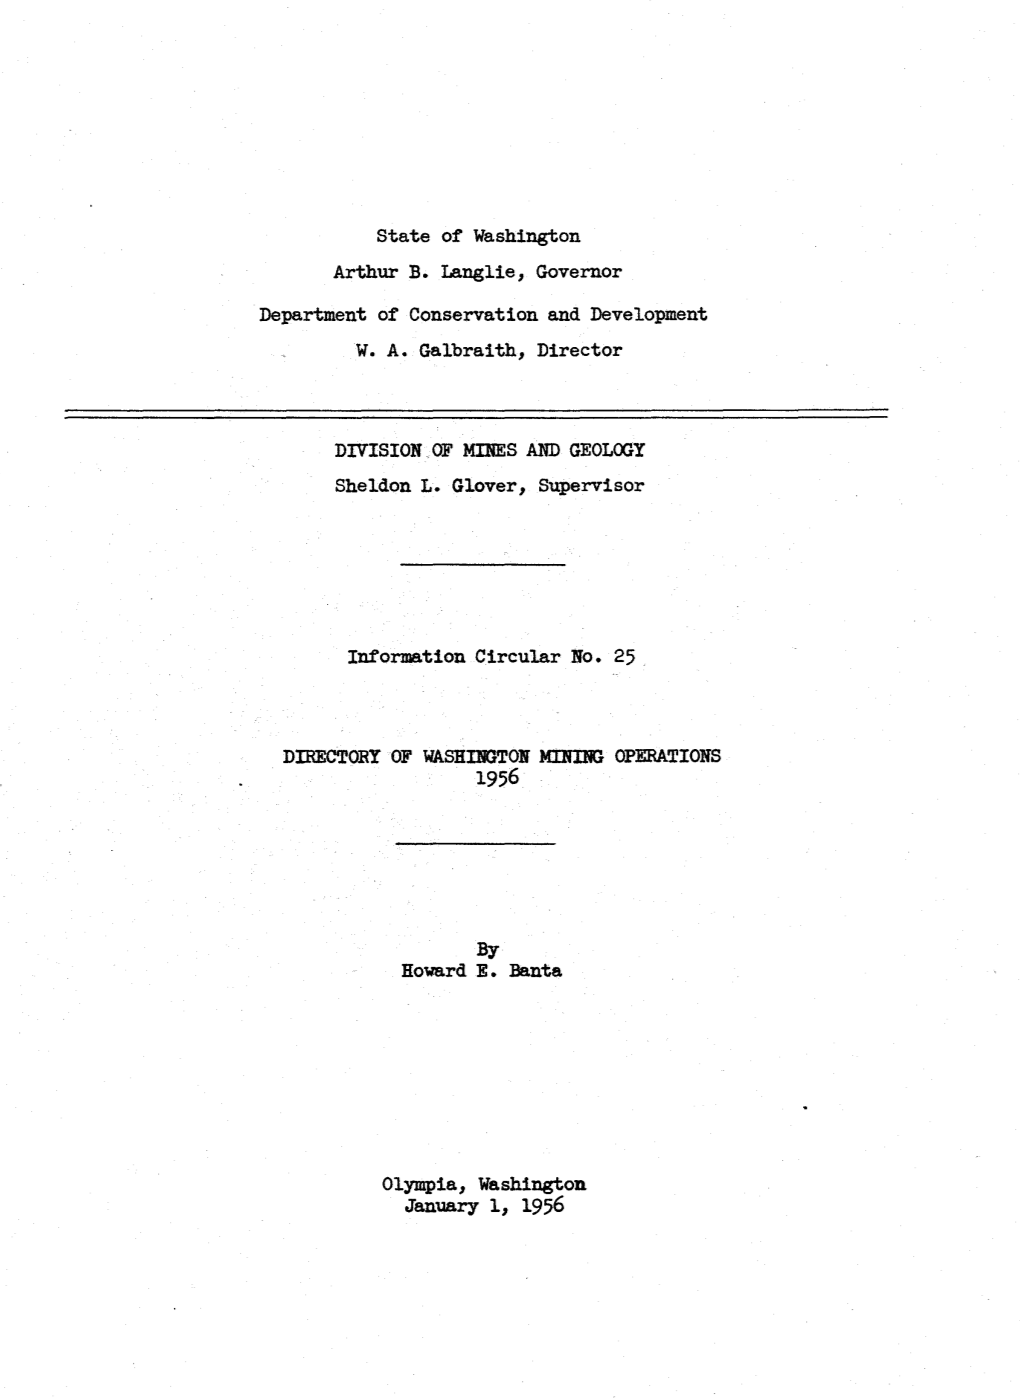 Information Circular 25: 1956 Directory of Washington Mining Operations